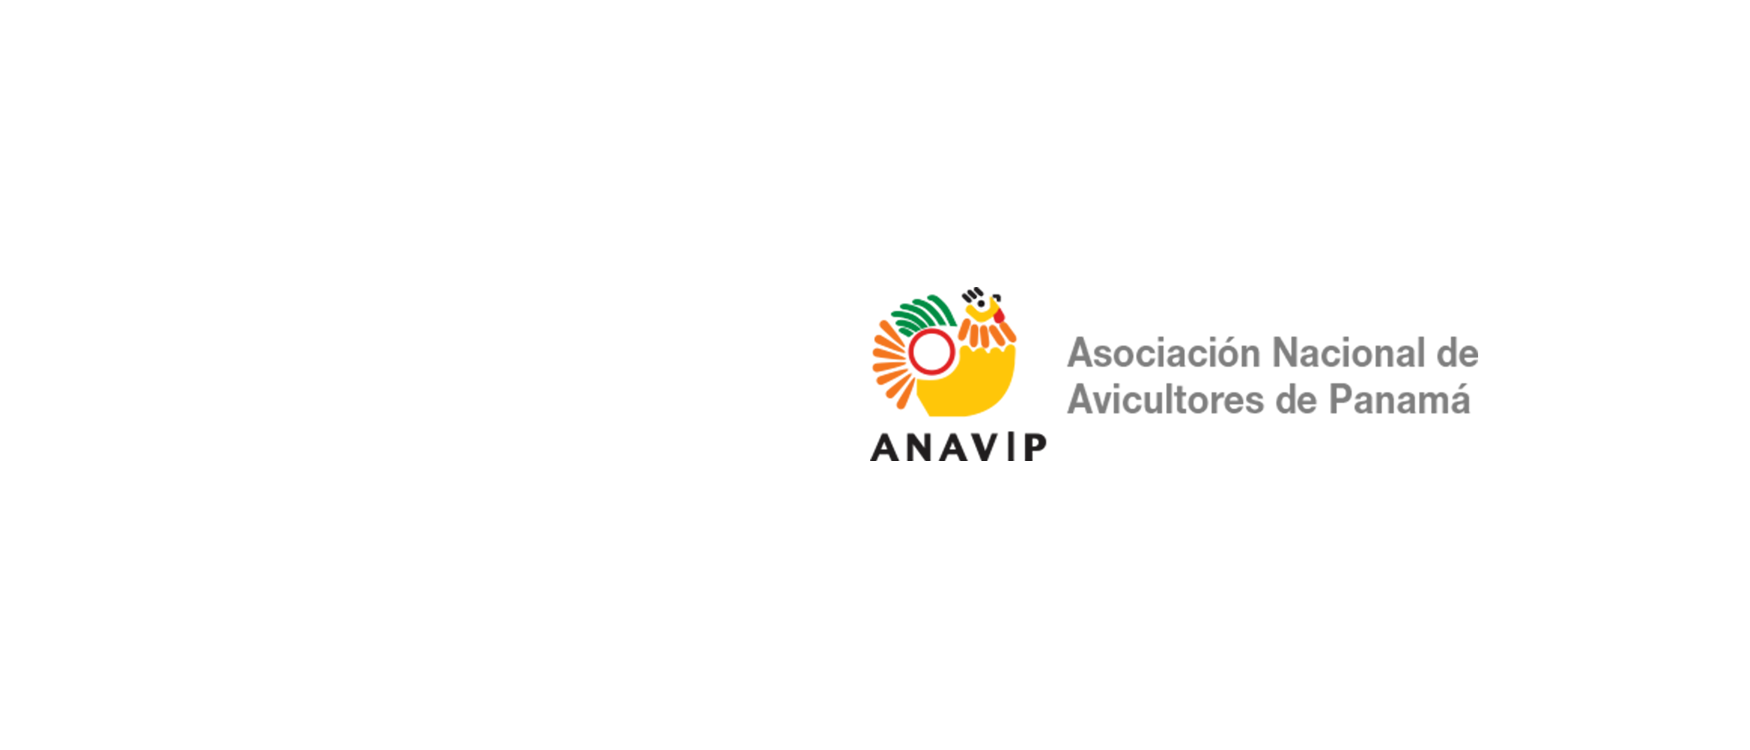 XXXIII Congreso Nacional de Avicultura ANAVIP 2022